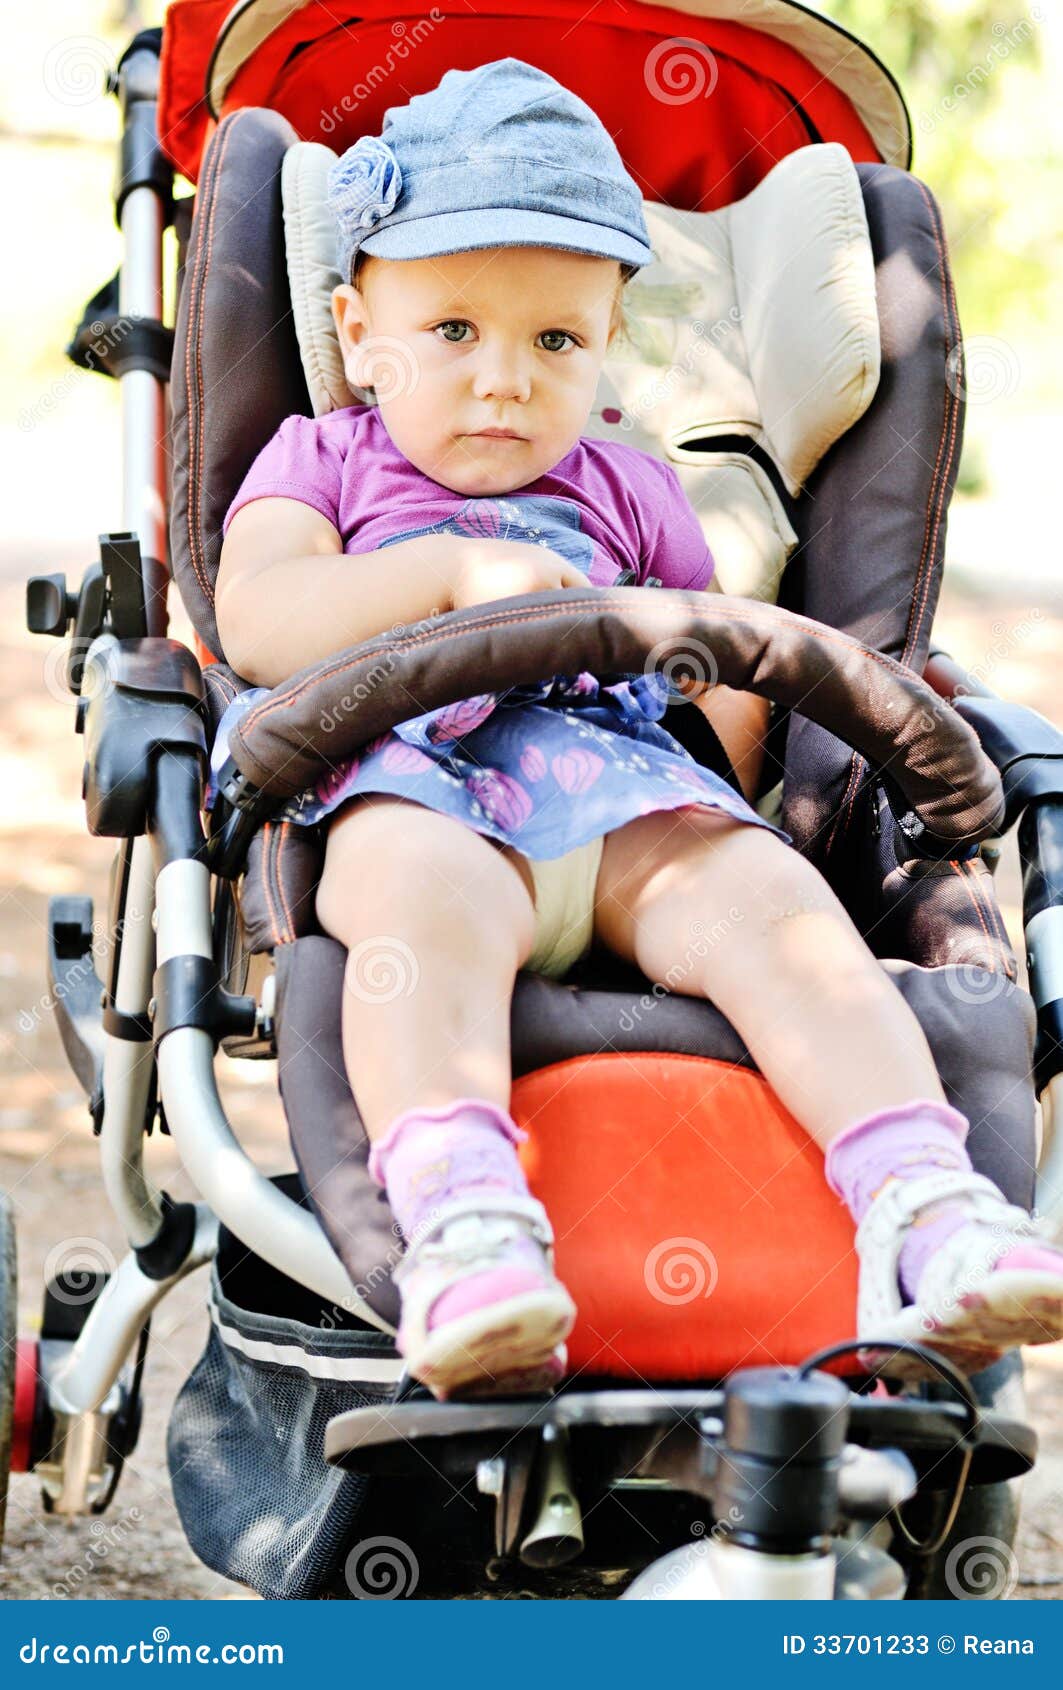 baby girl in stroller